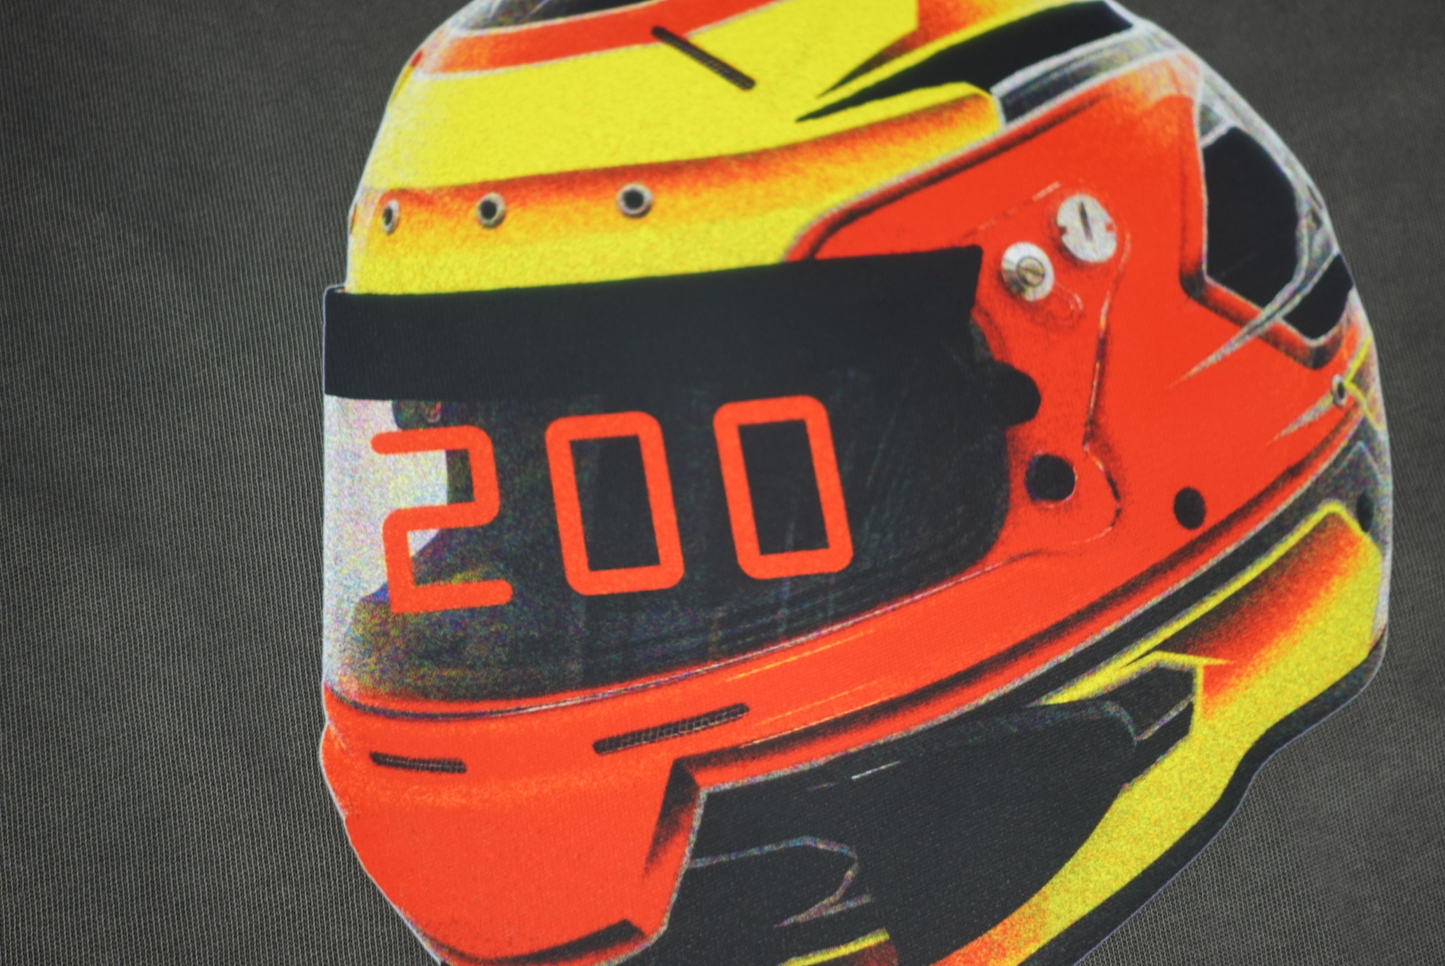 200 Helmet